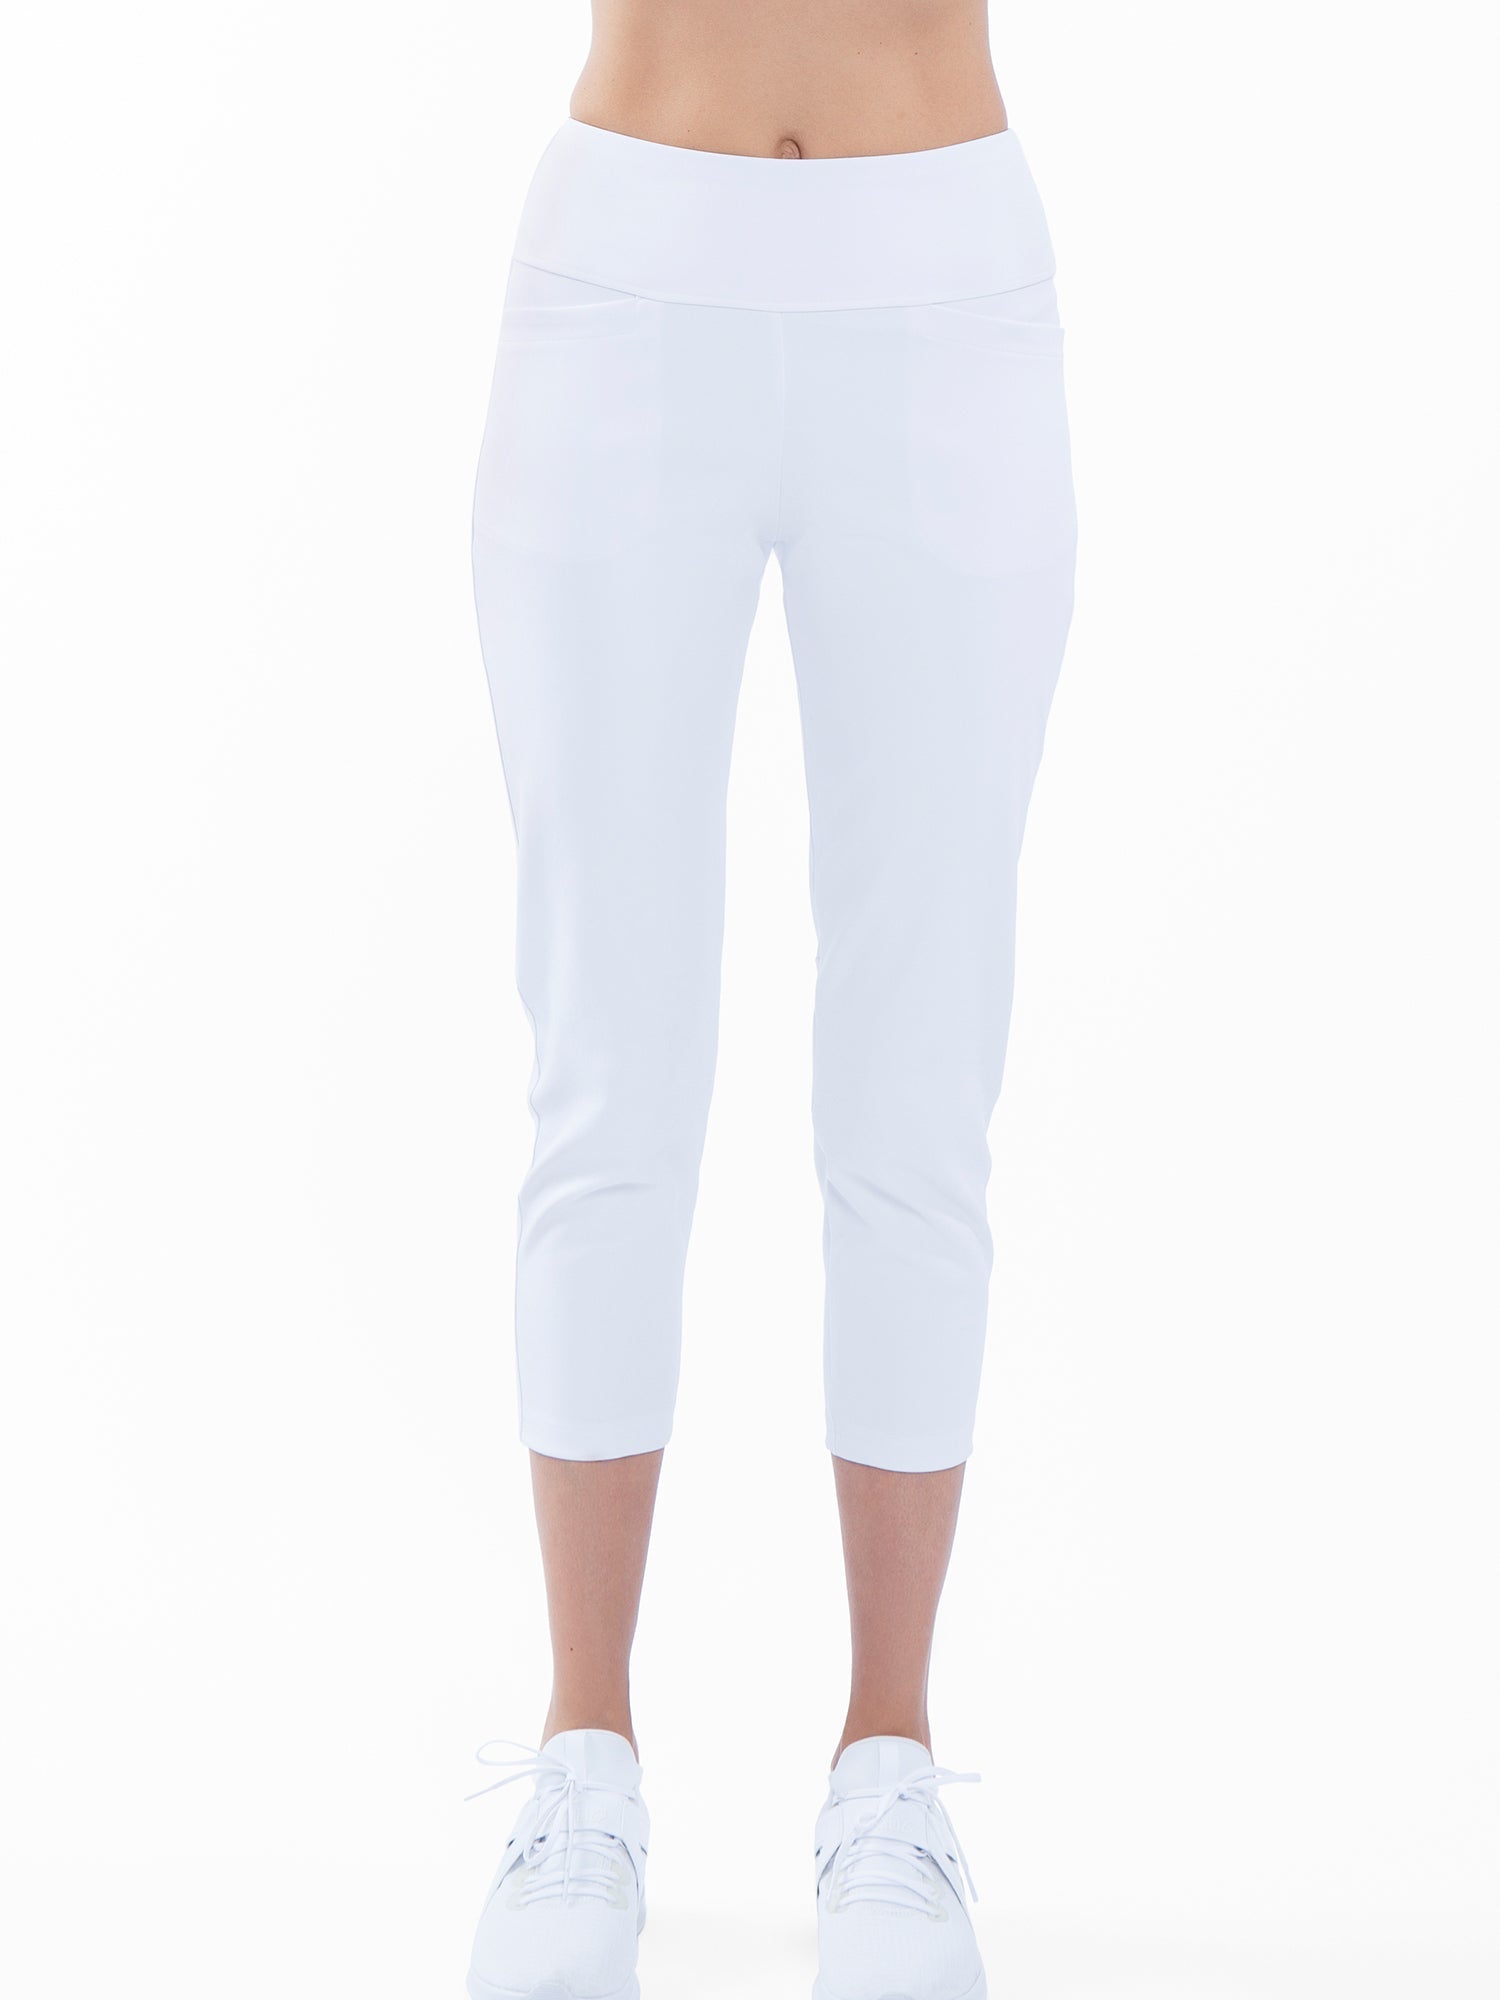 Women's White Capri Pants, Capri Golf Pants